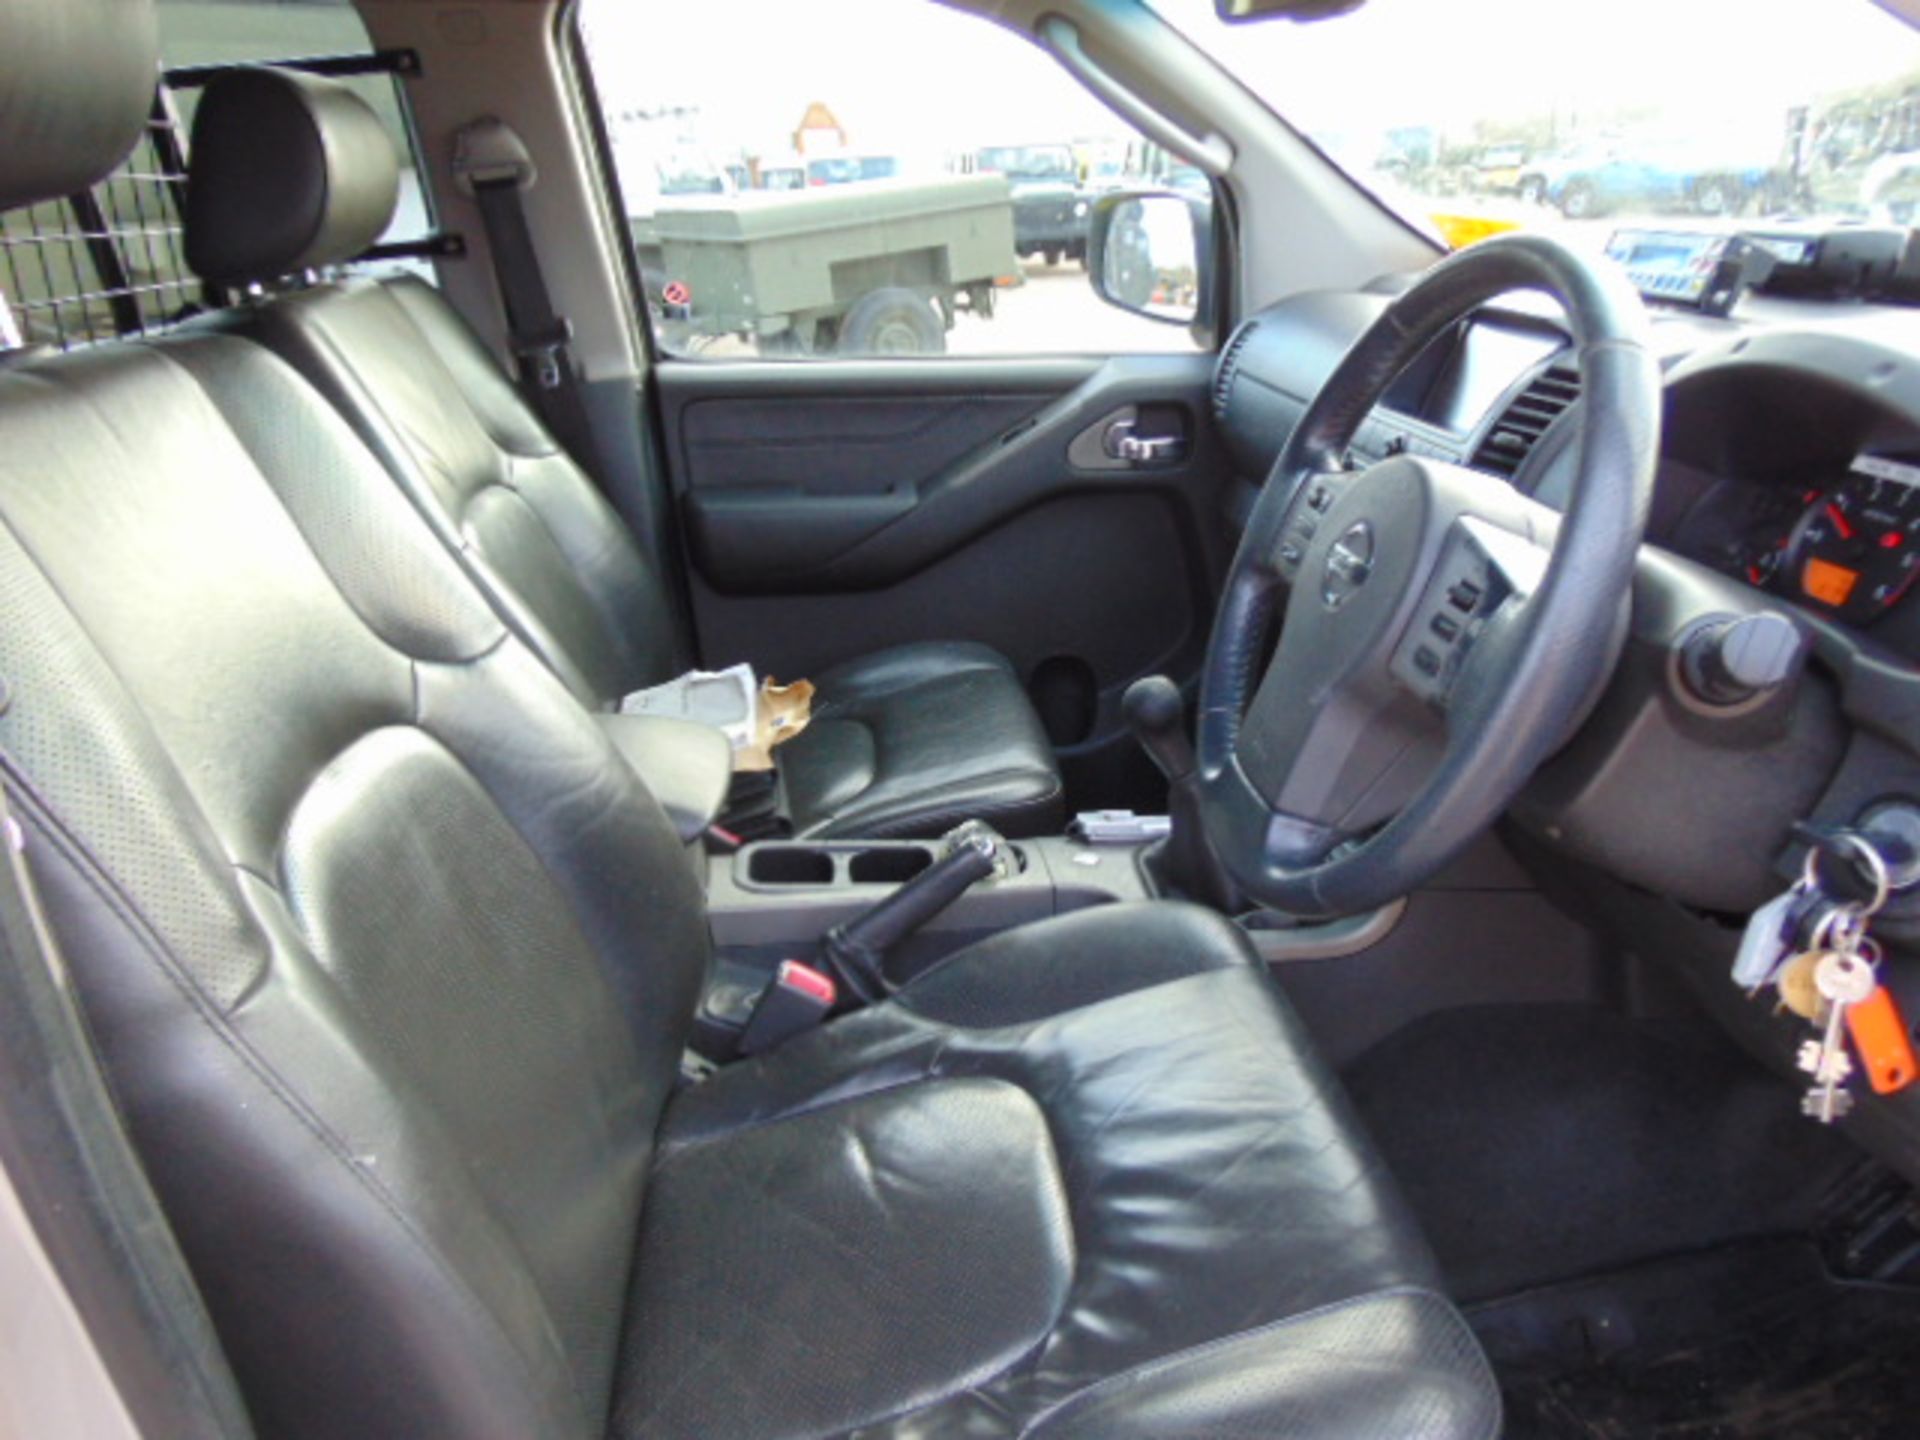 2008 Nissan Navara Aventura Double Cab 2.5 dCi Incident Response Vehicle - Image 14 of 24